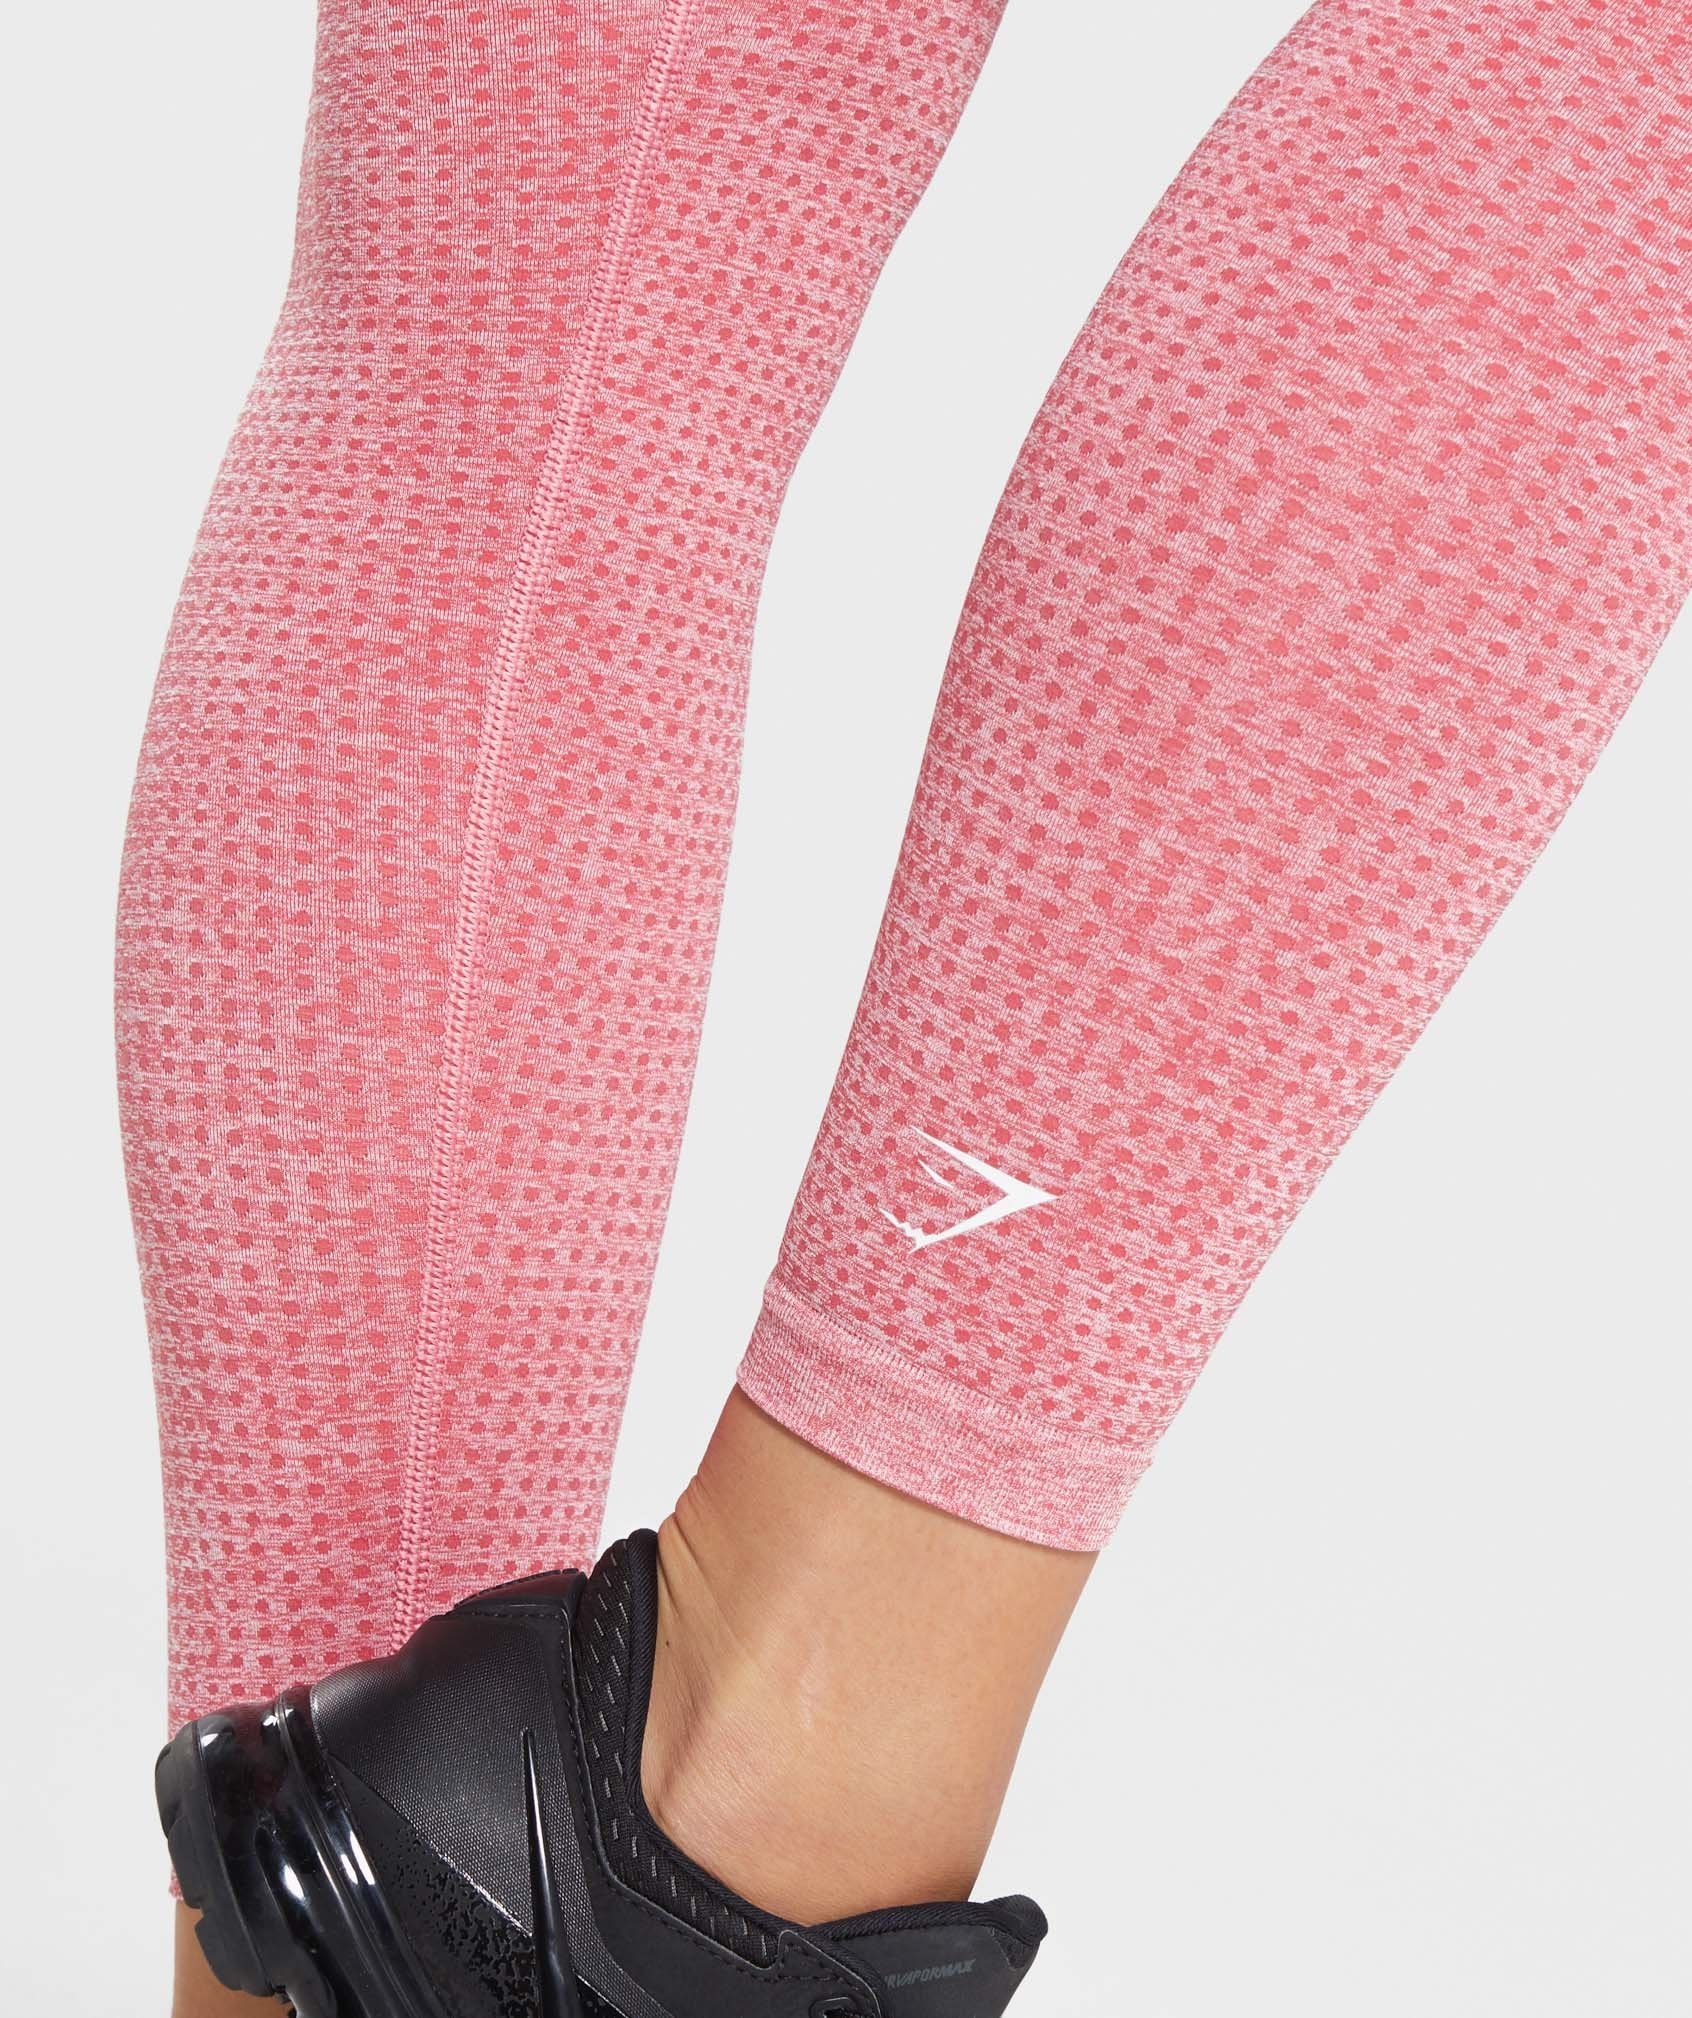 Vital Seamless Leggings in Pink Marl - view 6